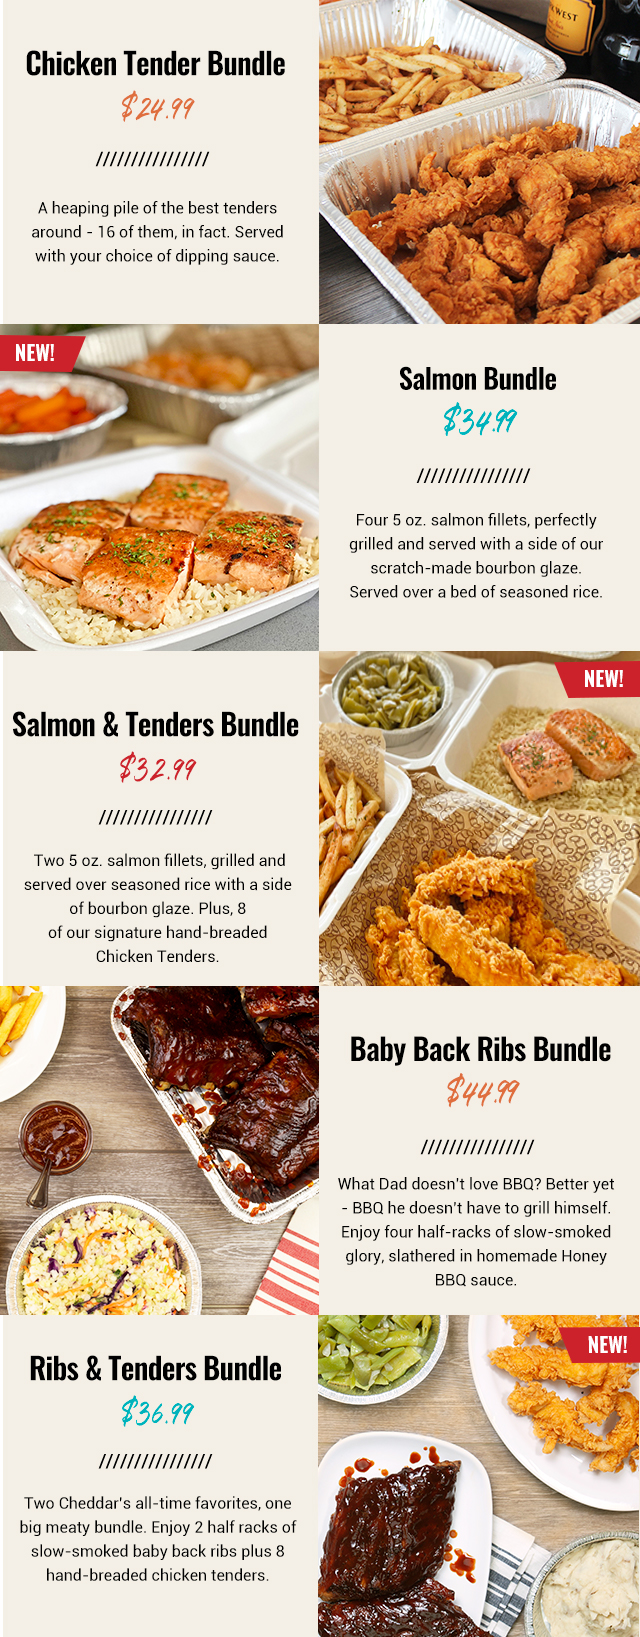 Chicken Tender Bundle | Salmon Bundle | Salmon & Tenders Bundle | Baby Back Ribs Bundle | Ribs & Tenders Bundle